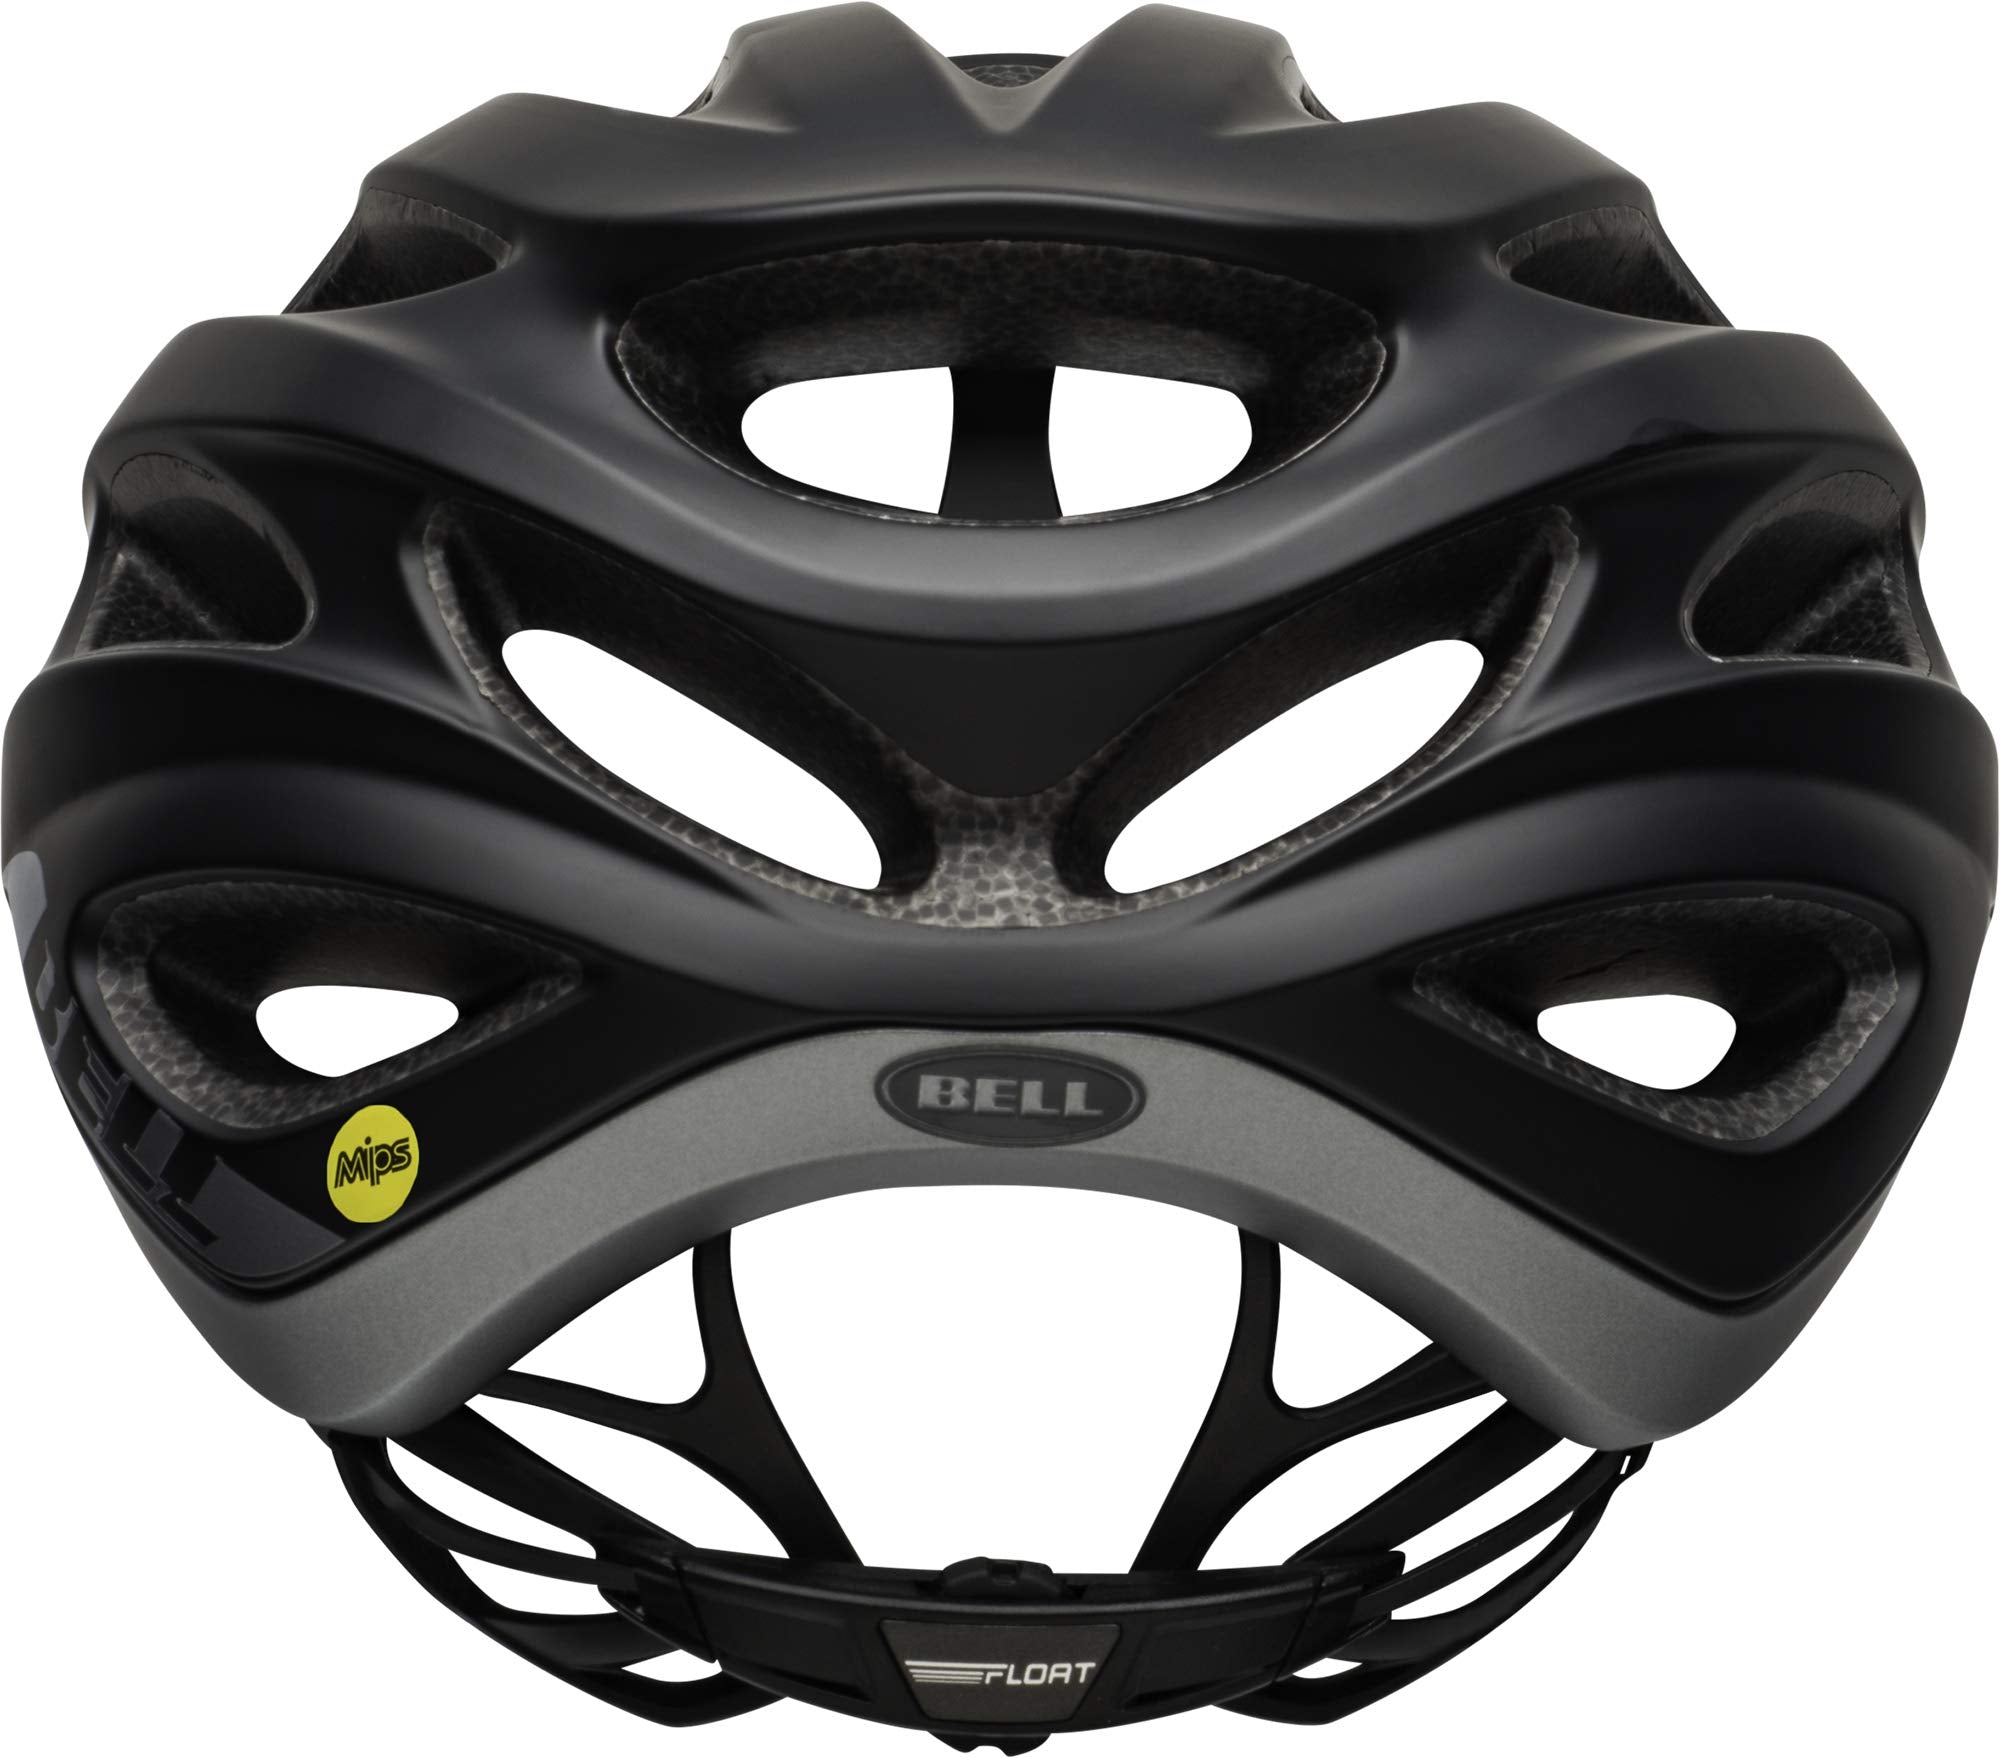 BELL Formula MIPS Adult Road Bike Helmet  - Like New